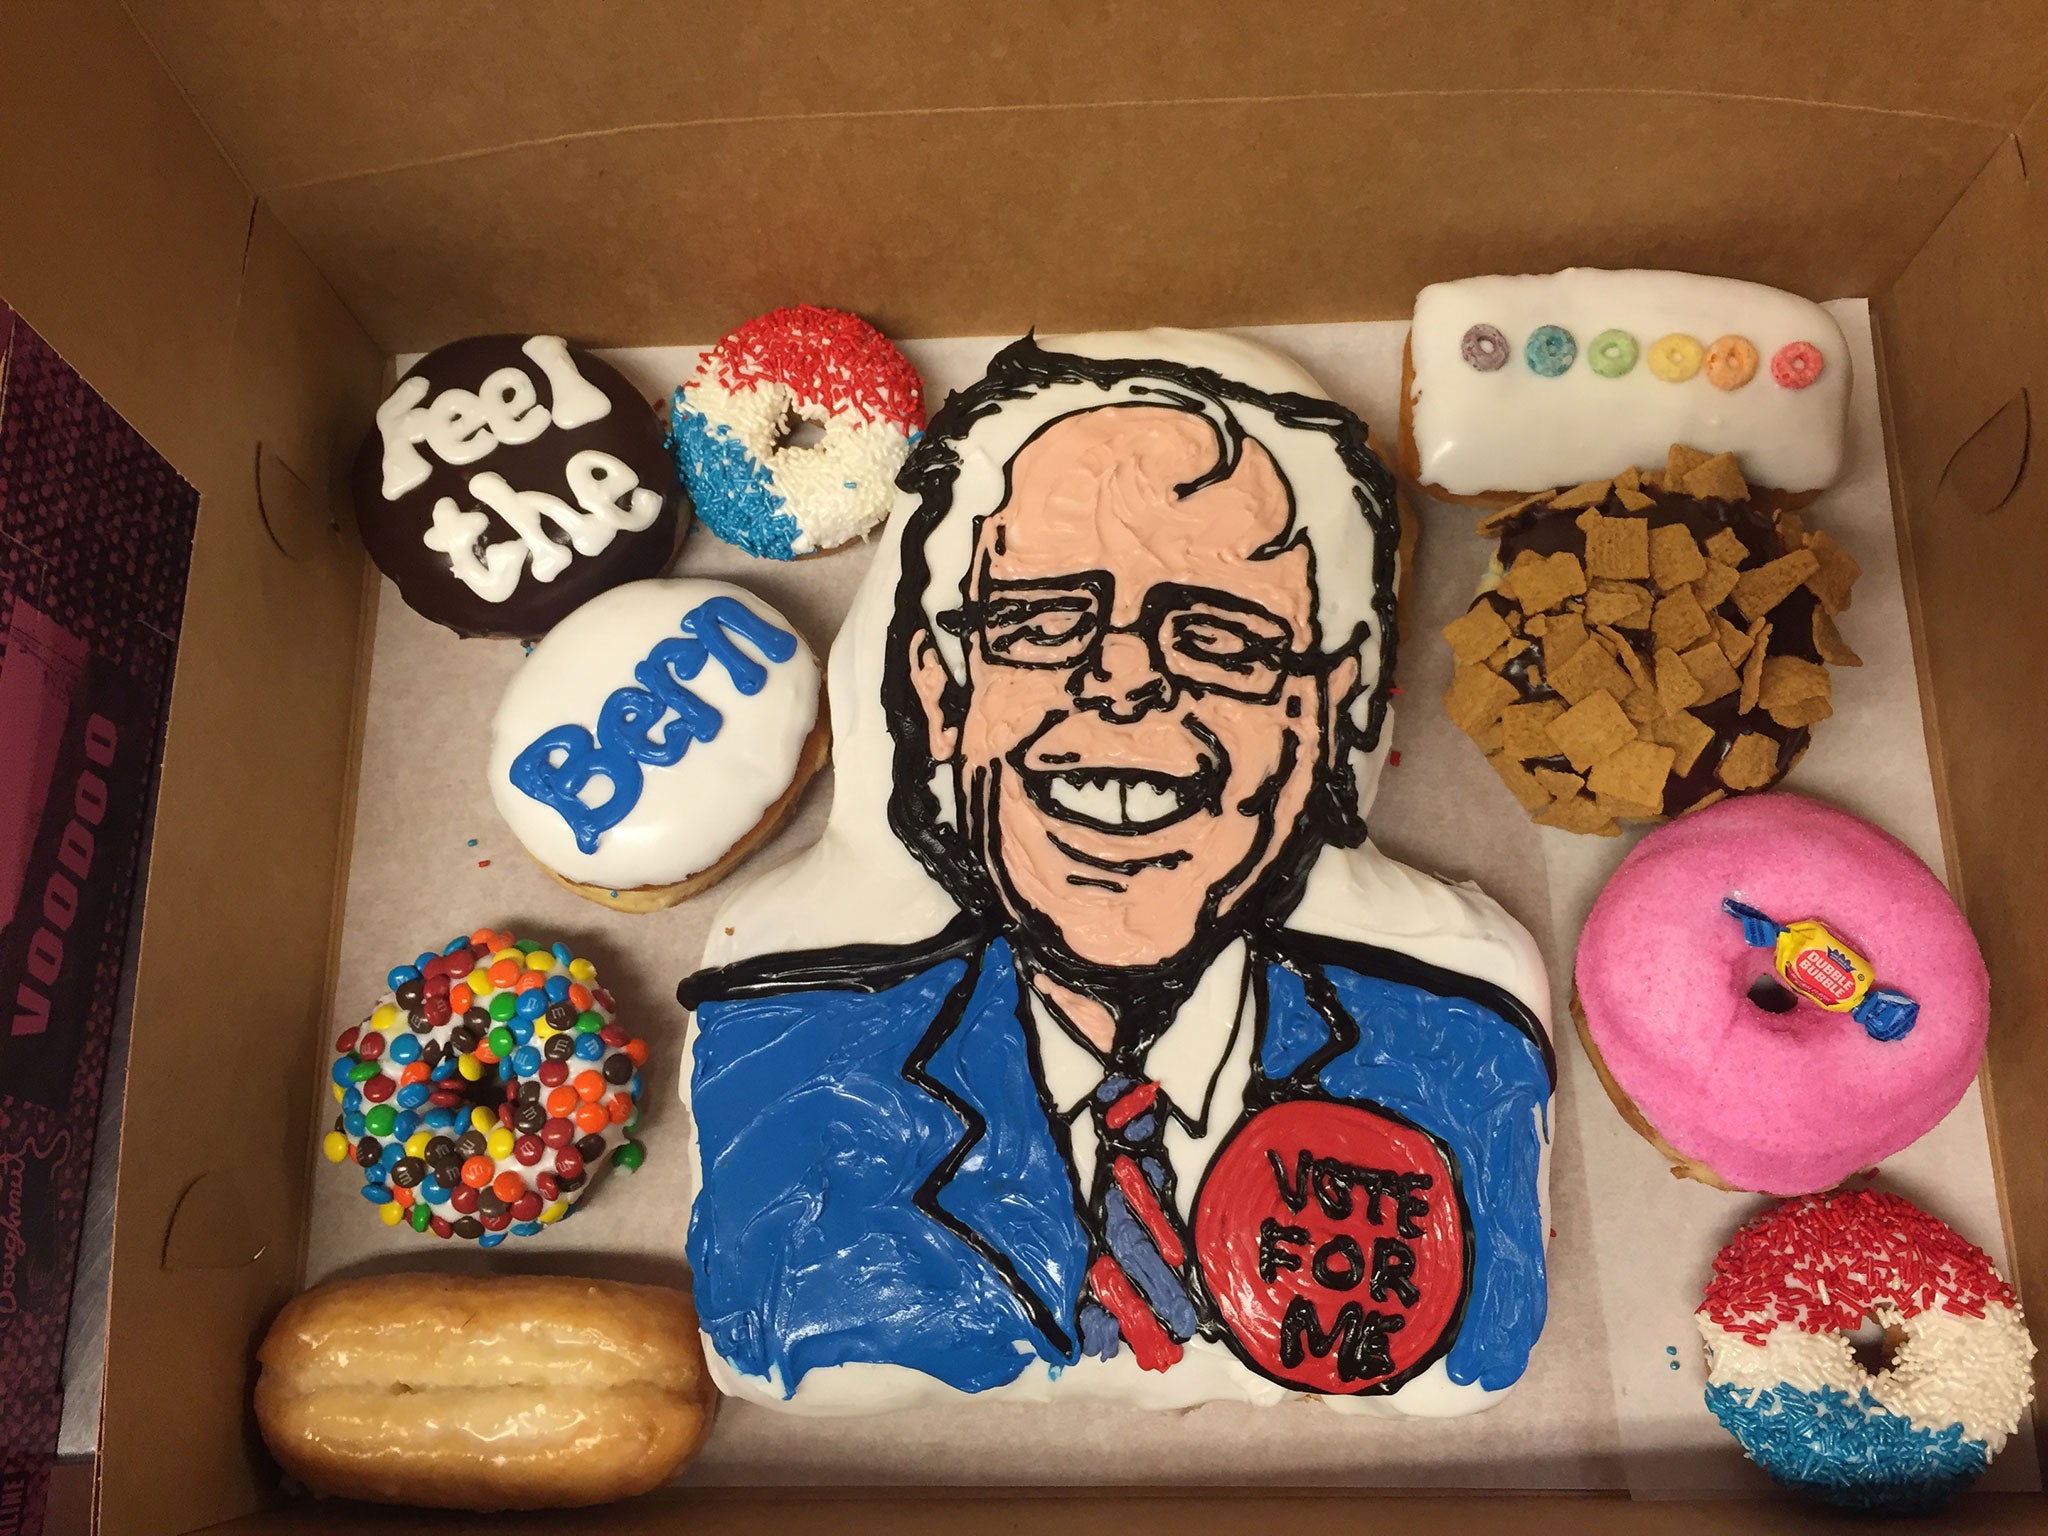 Bernie Sanders-based sugary snacks, made by Portland's Voodoo Doughnut